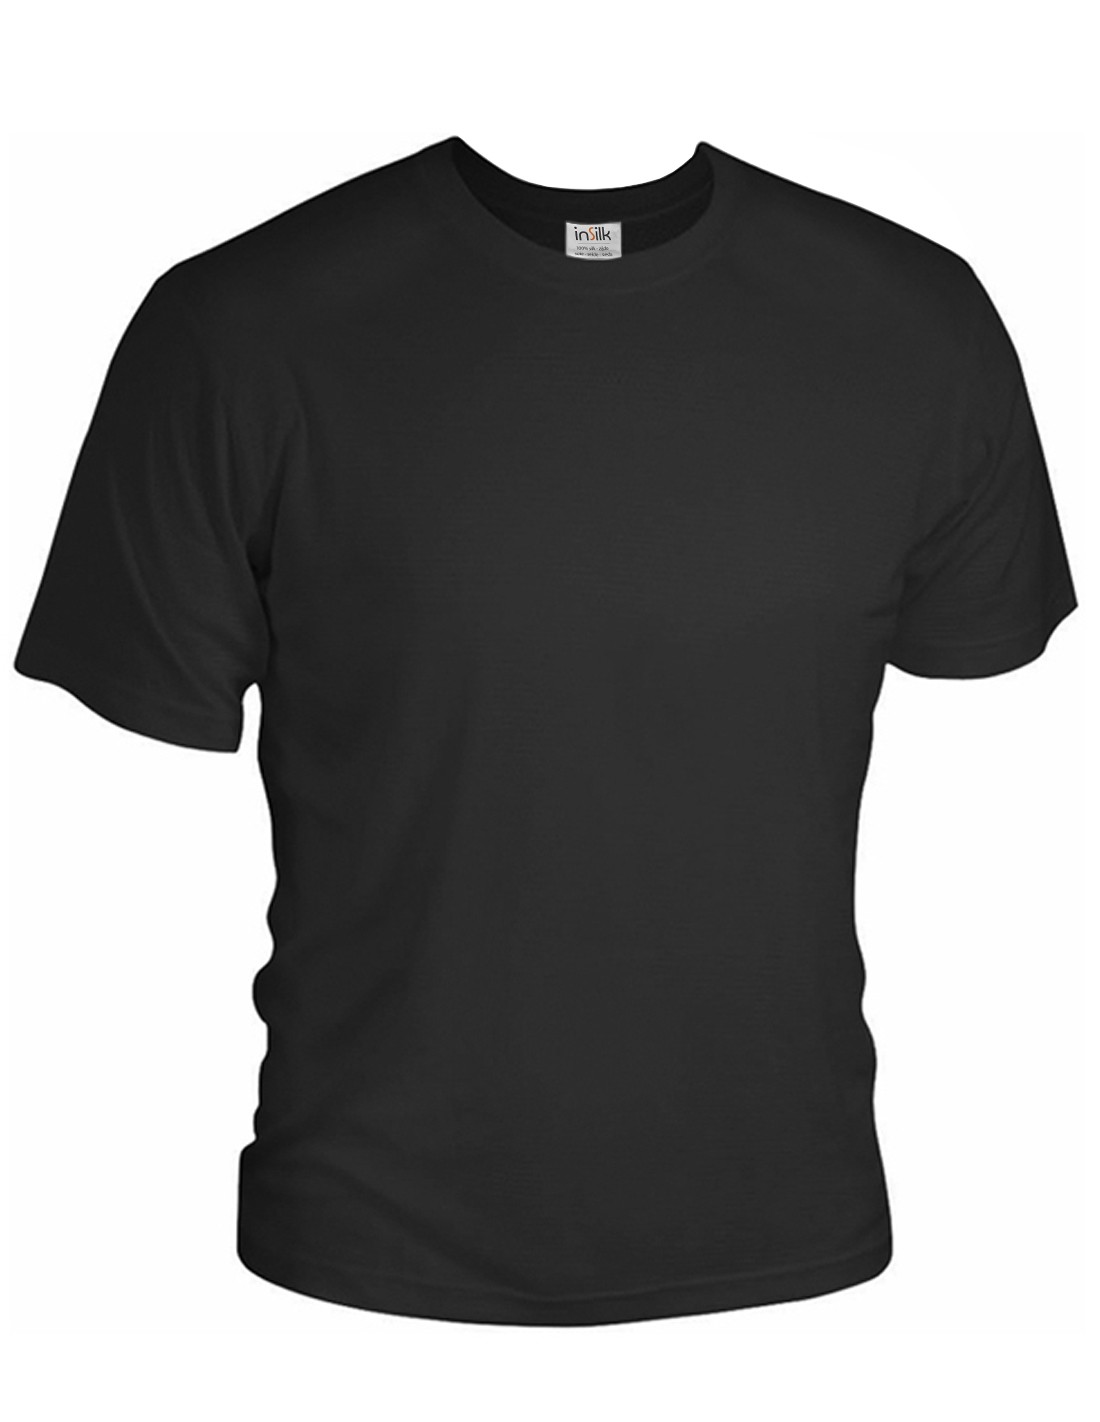 Ellendig herhaling omhelzing Zijden T-Shirt Rondhals inSilk Silkbasics Zwart